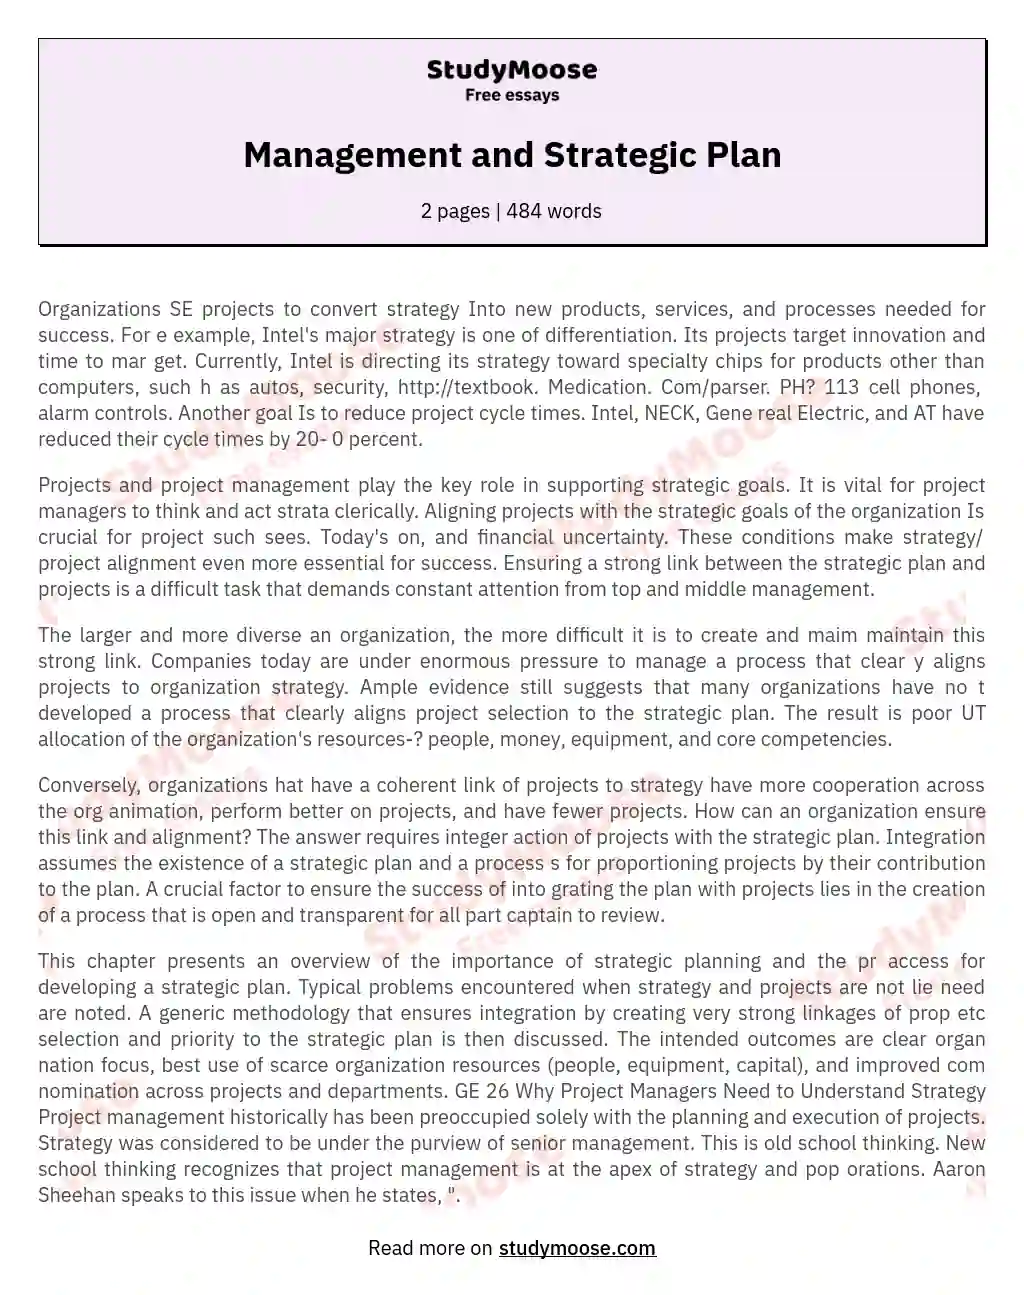 Management and Strategic Plan